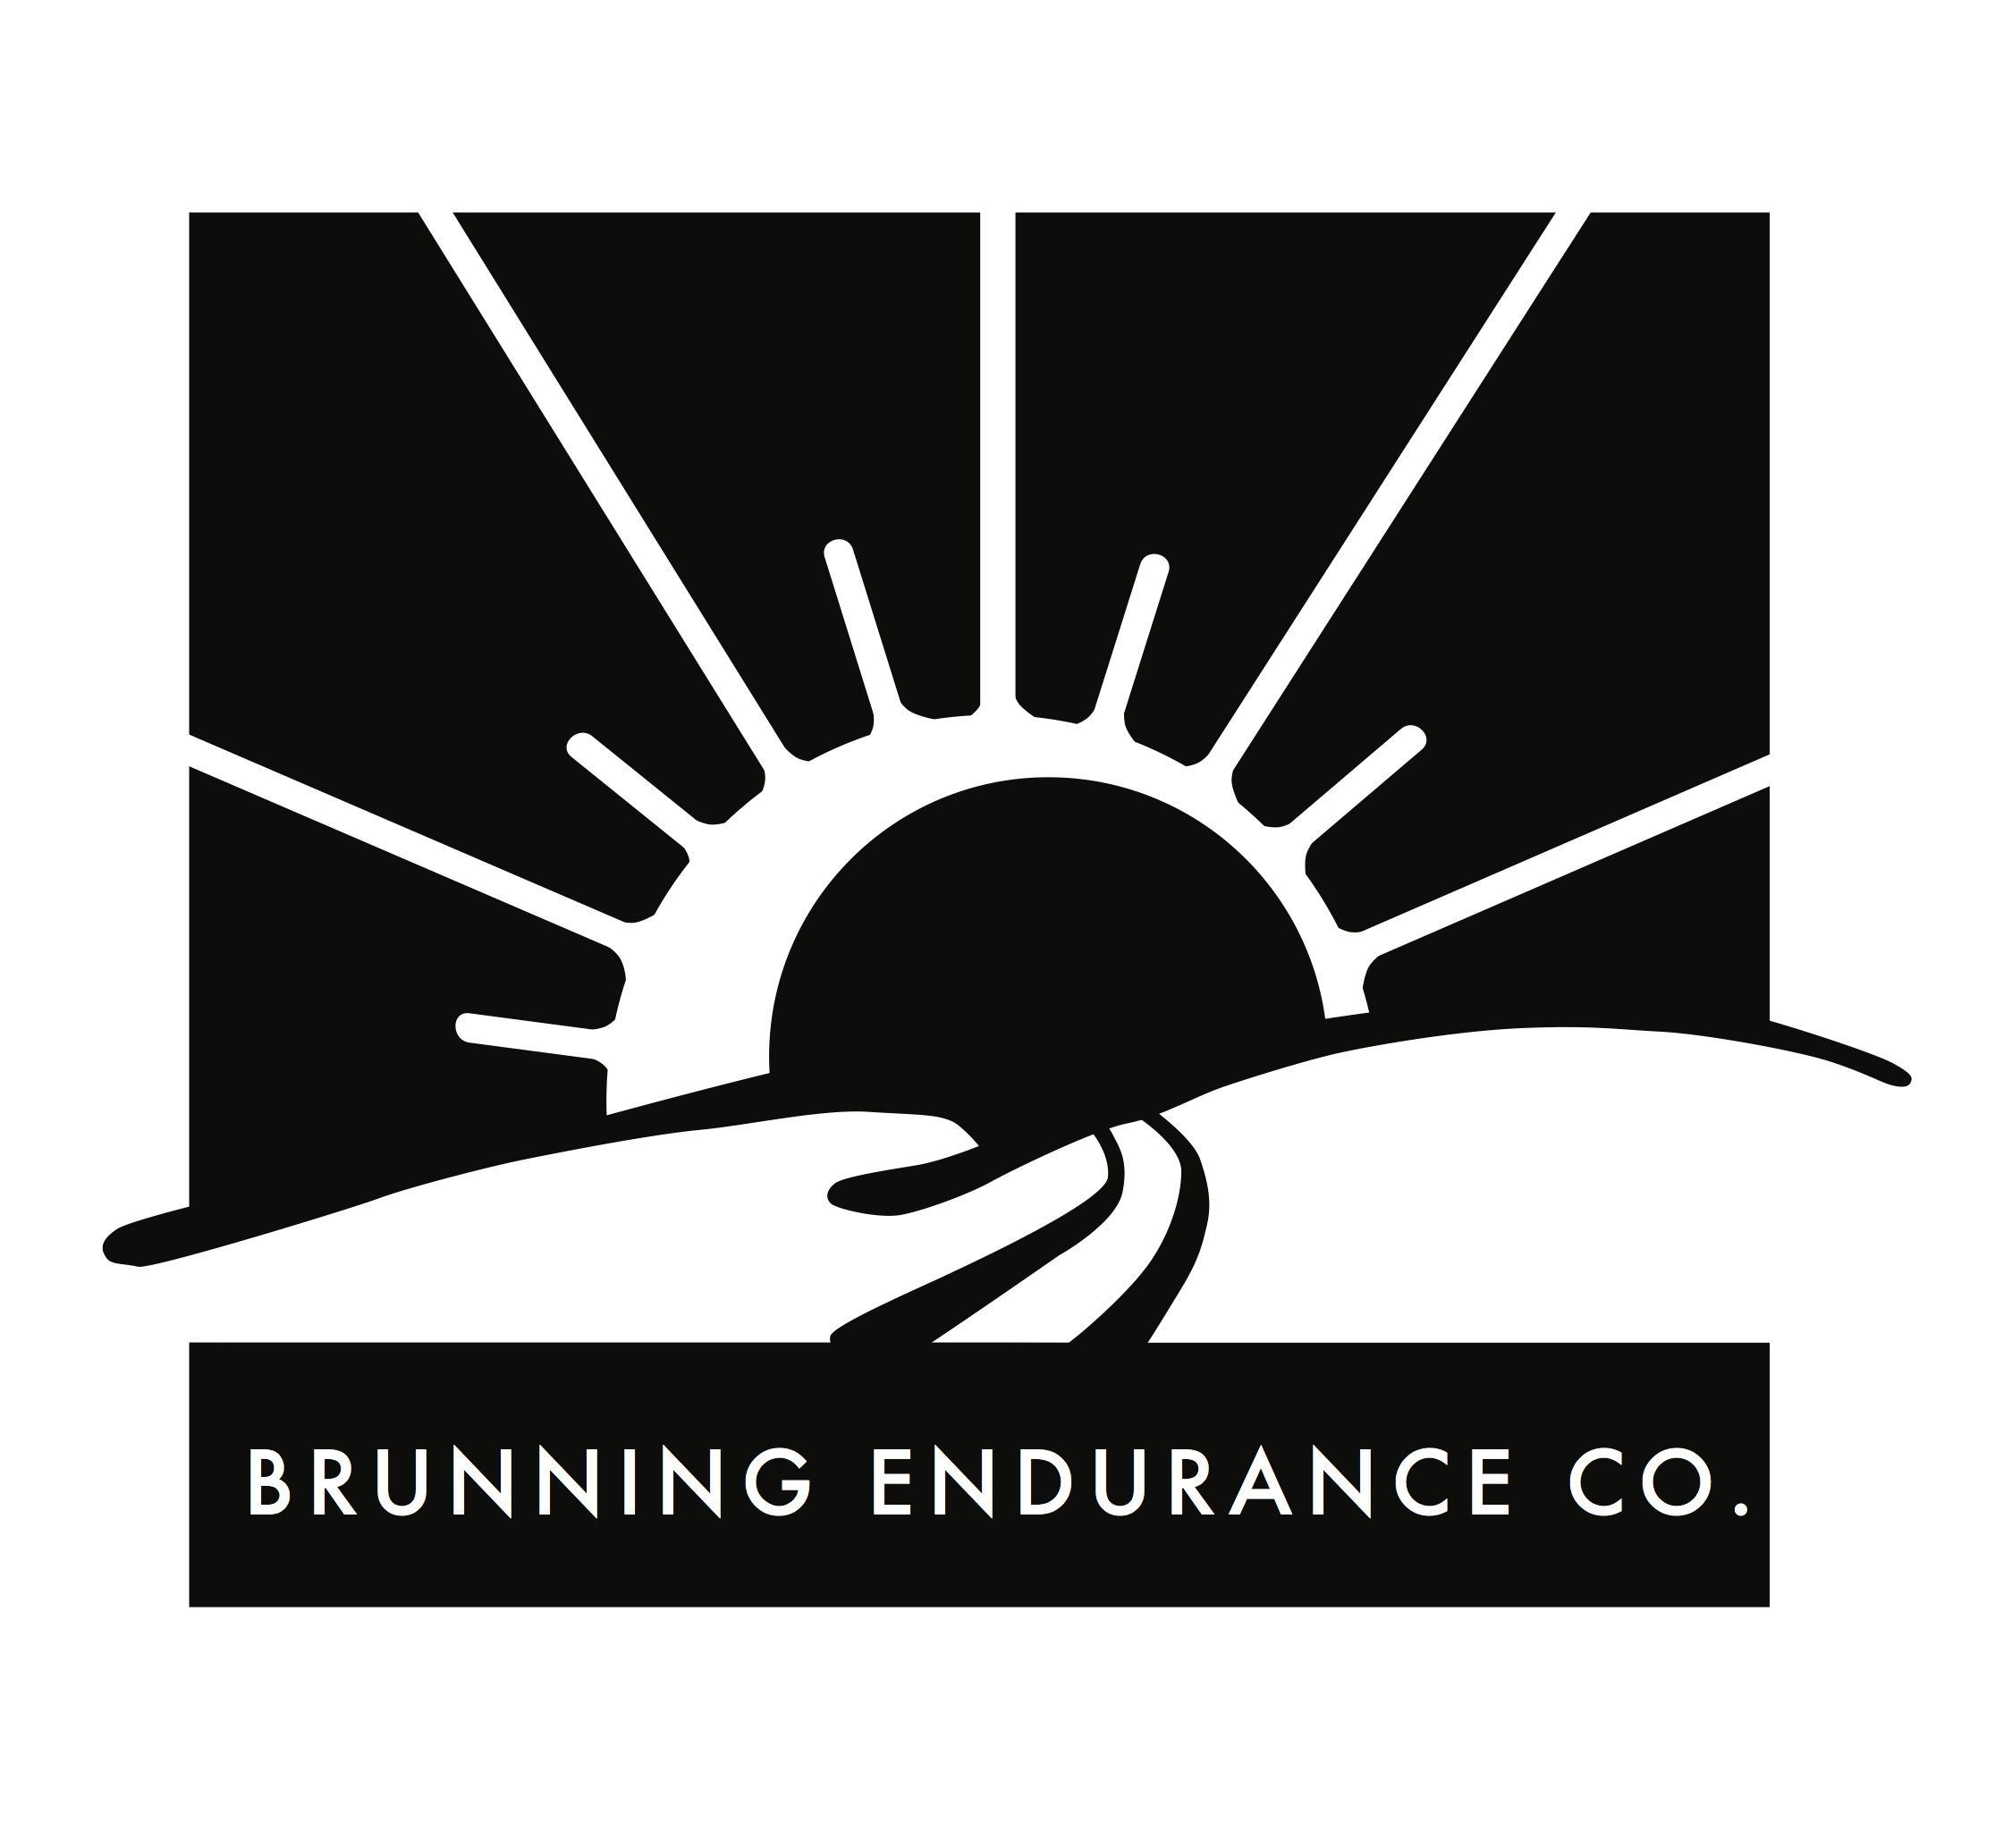 Brunning Endurance Co